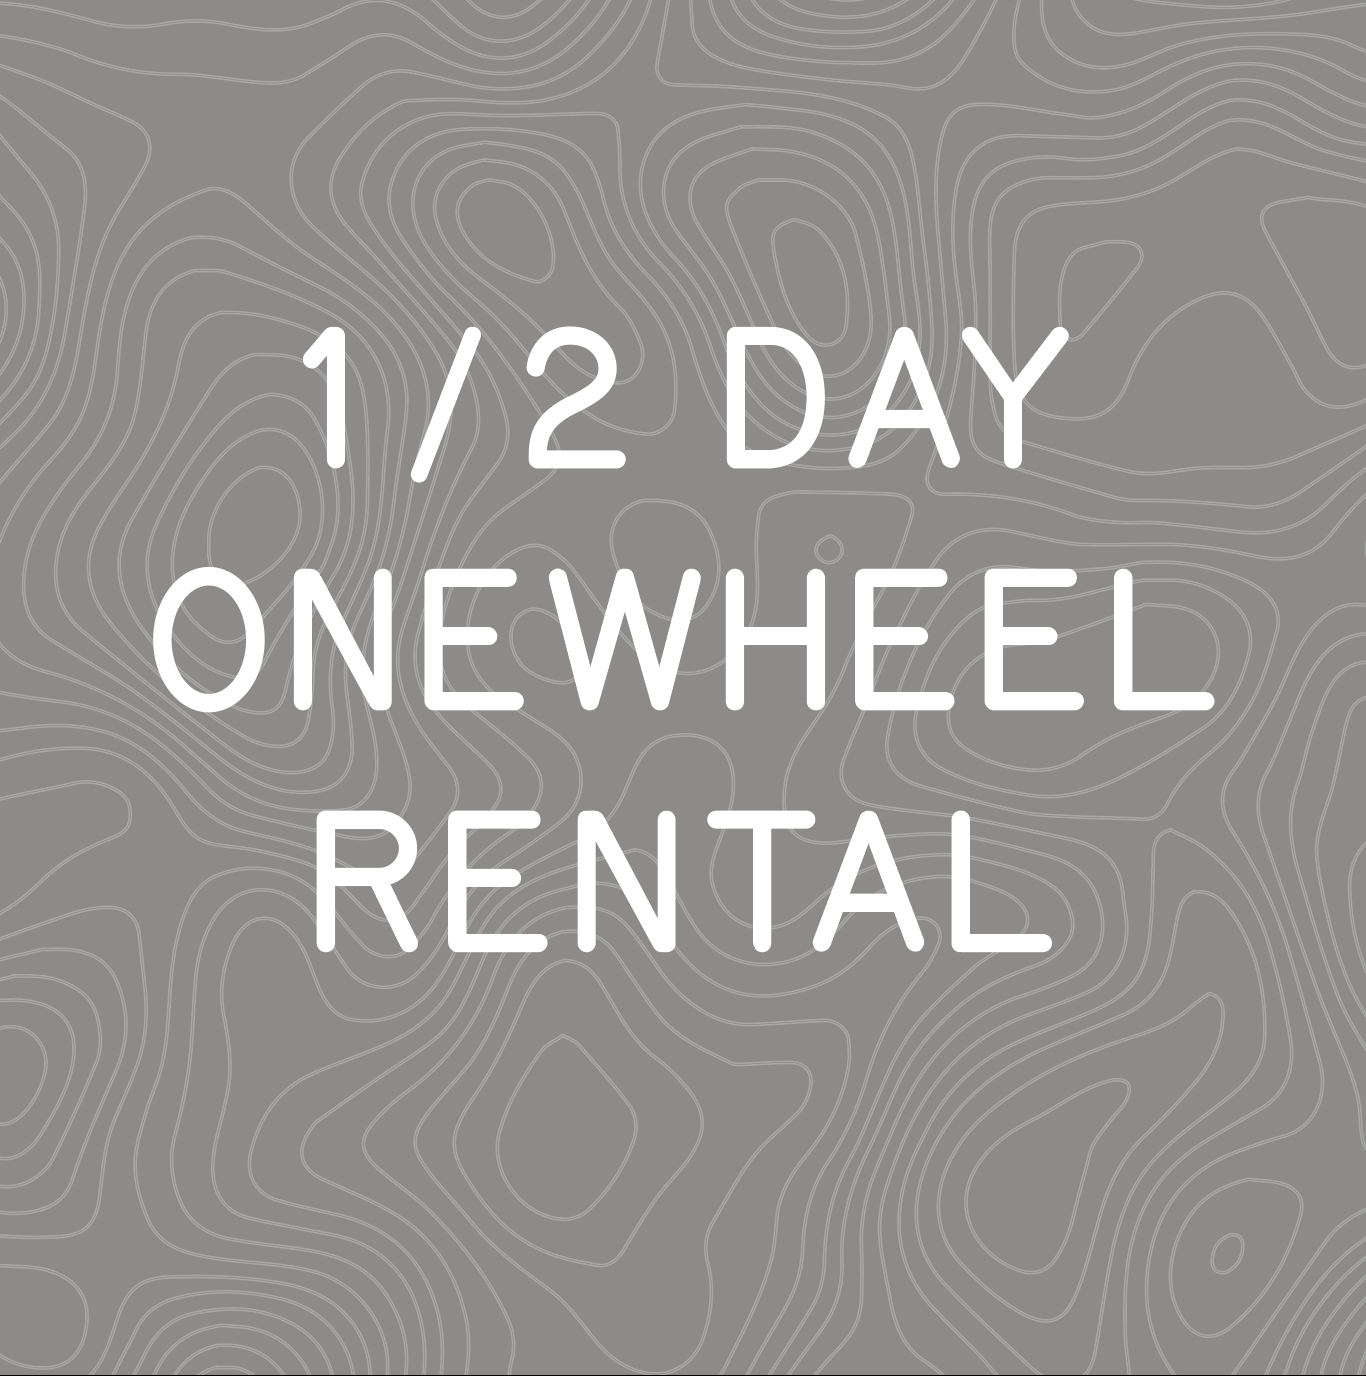 1/2 Day Onewheel Rental